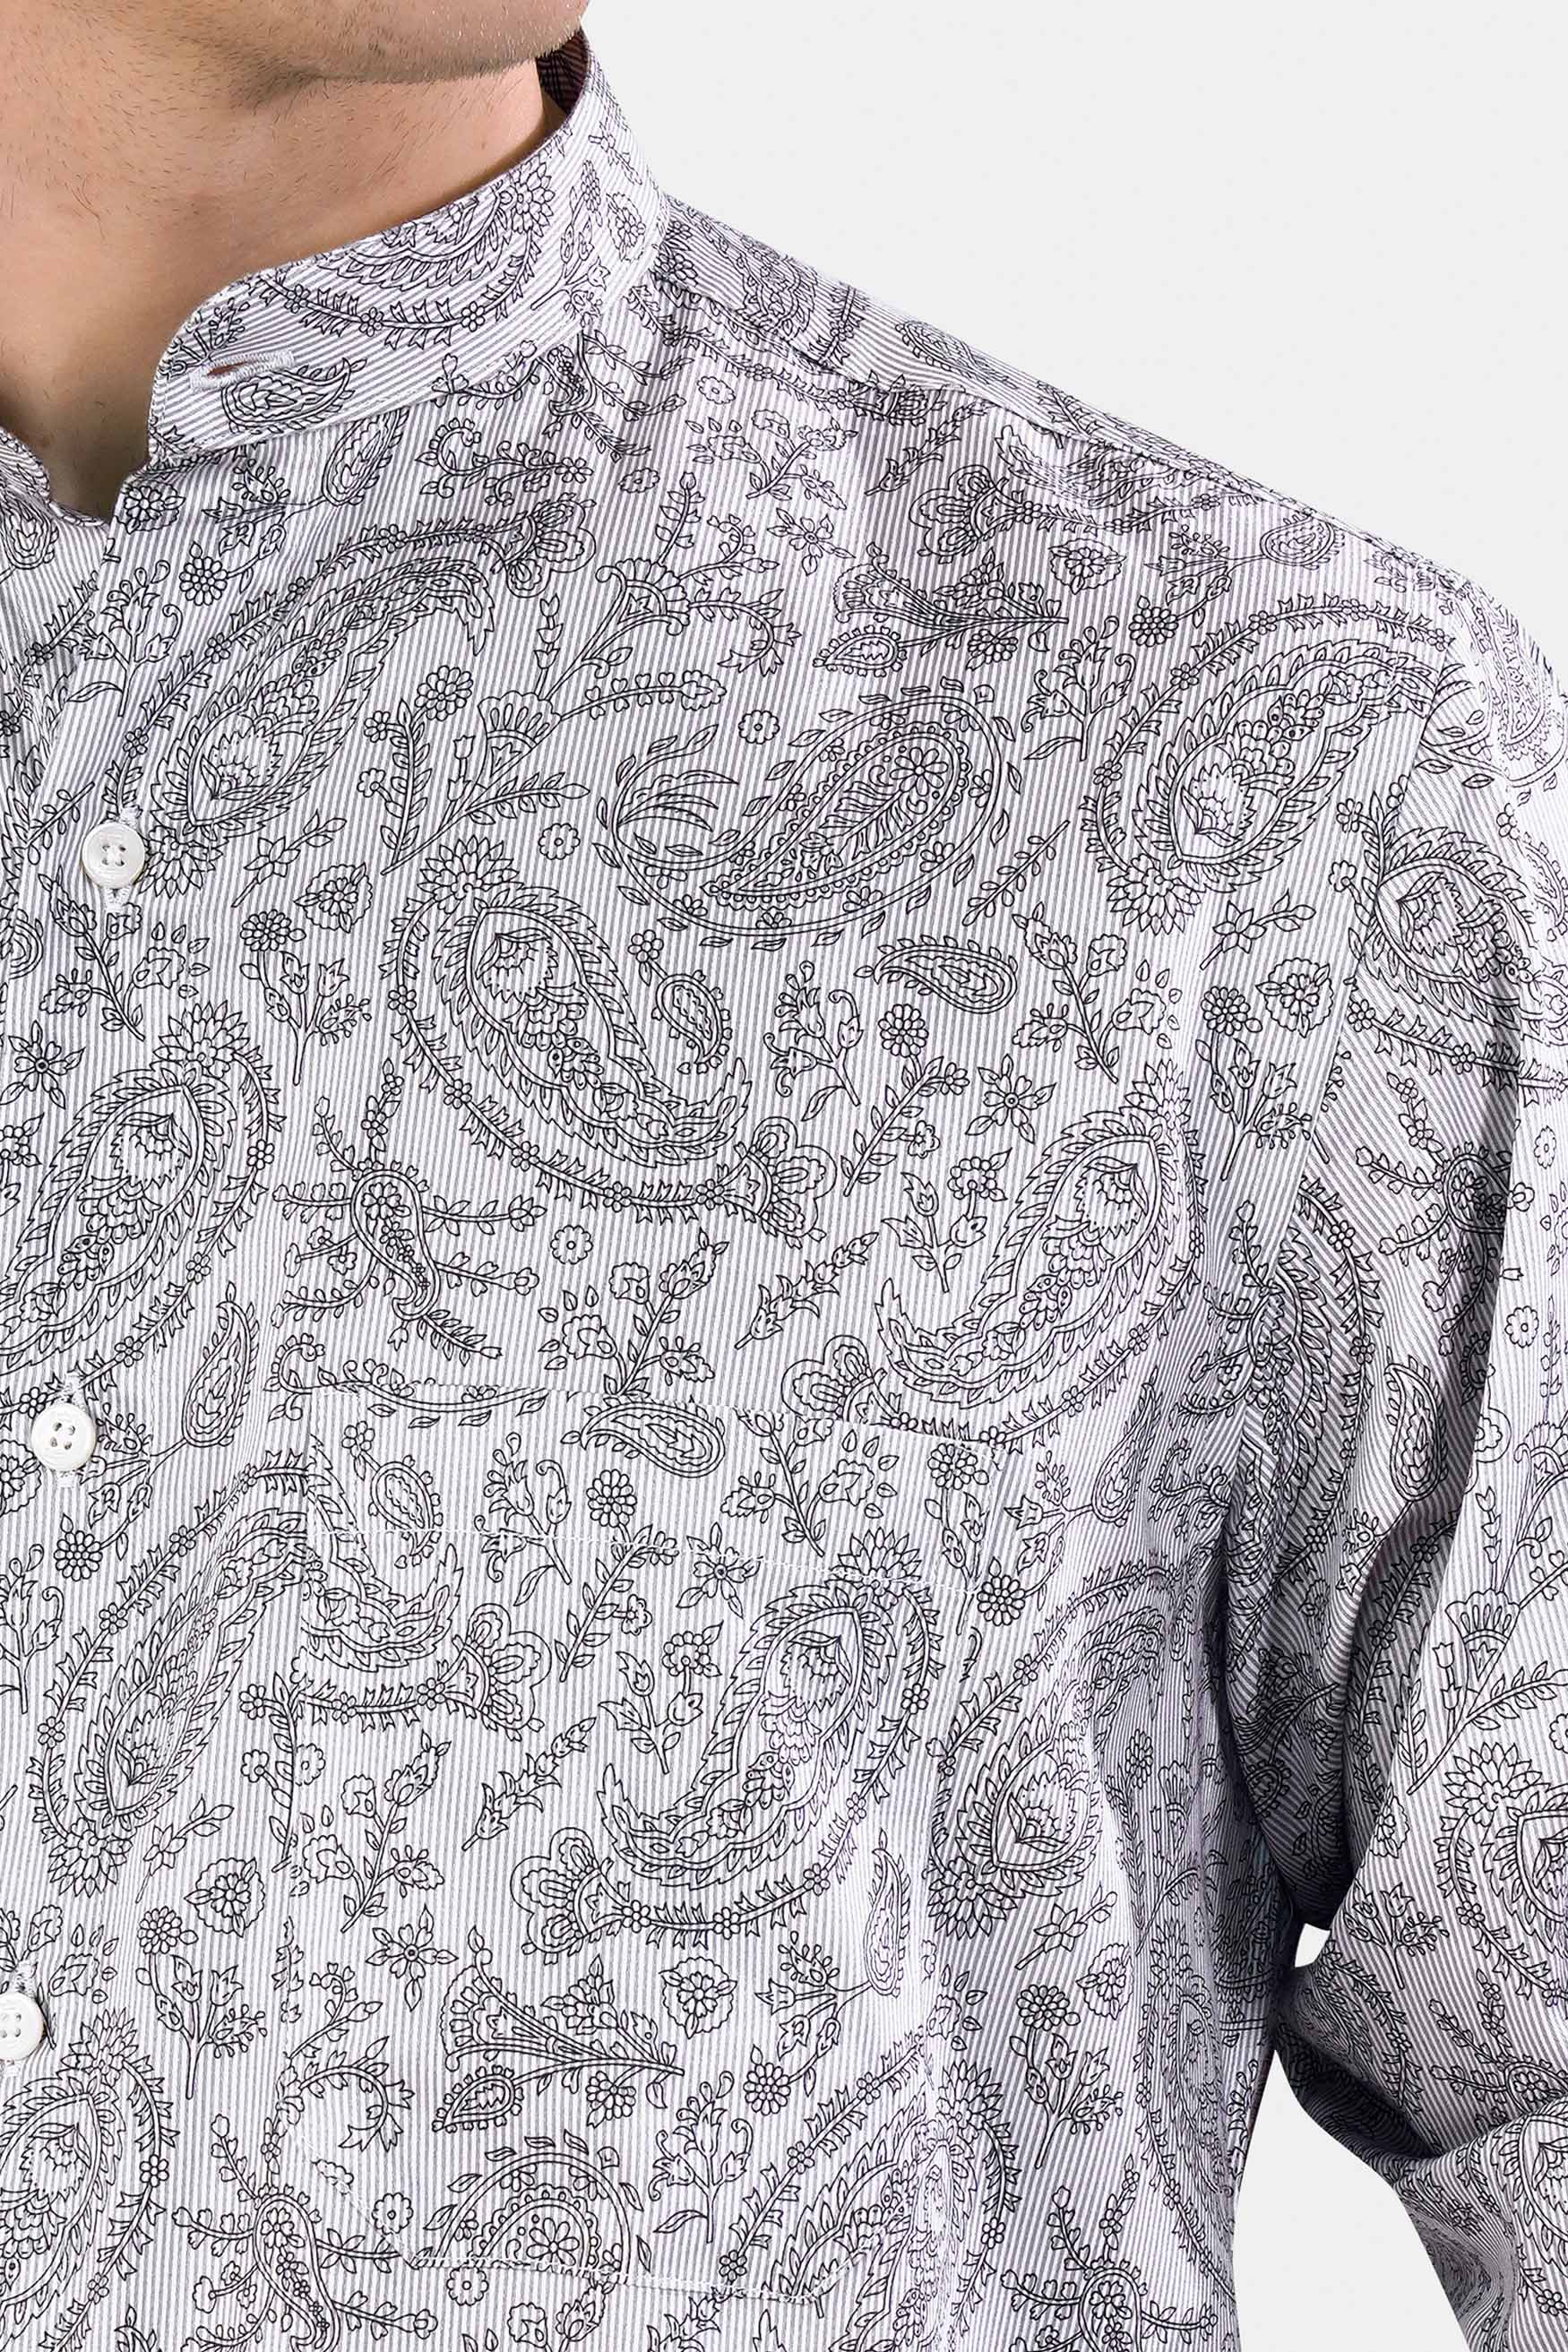 Nobel Gray and Black Paisley Printed Super Soft Premium Cotton Designer Shirt